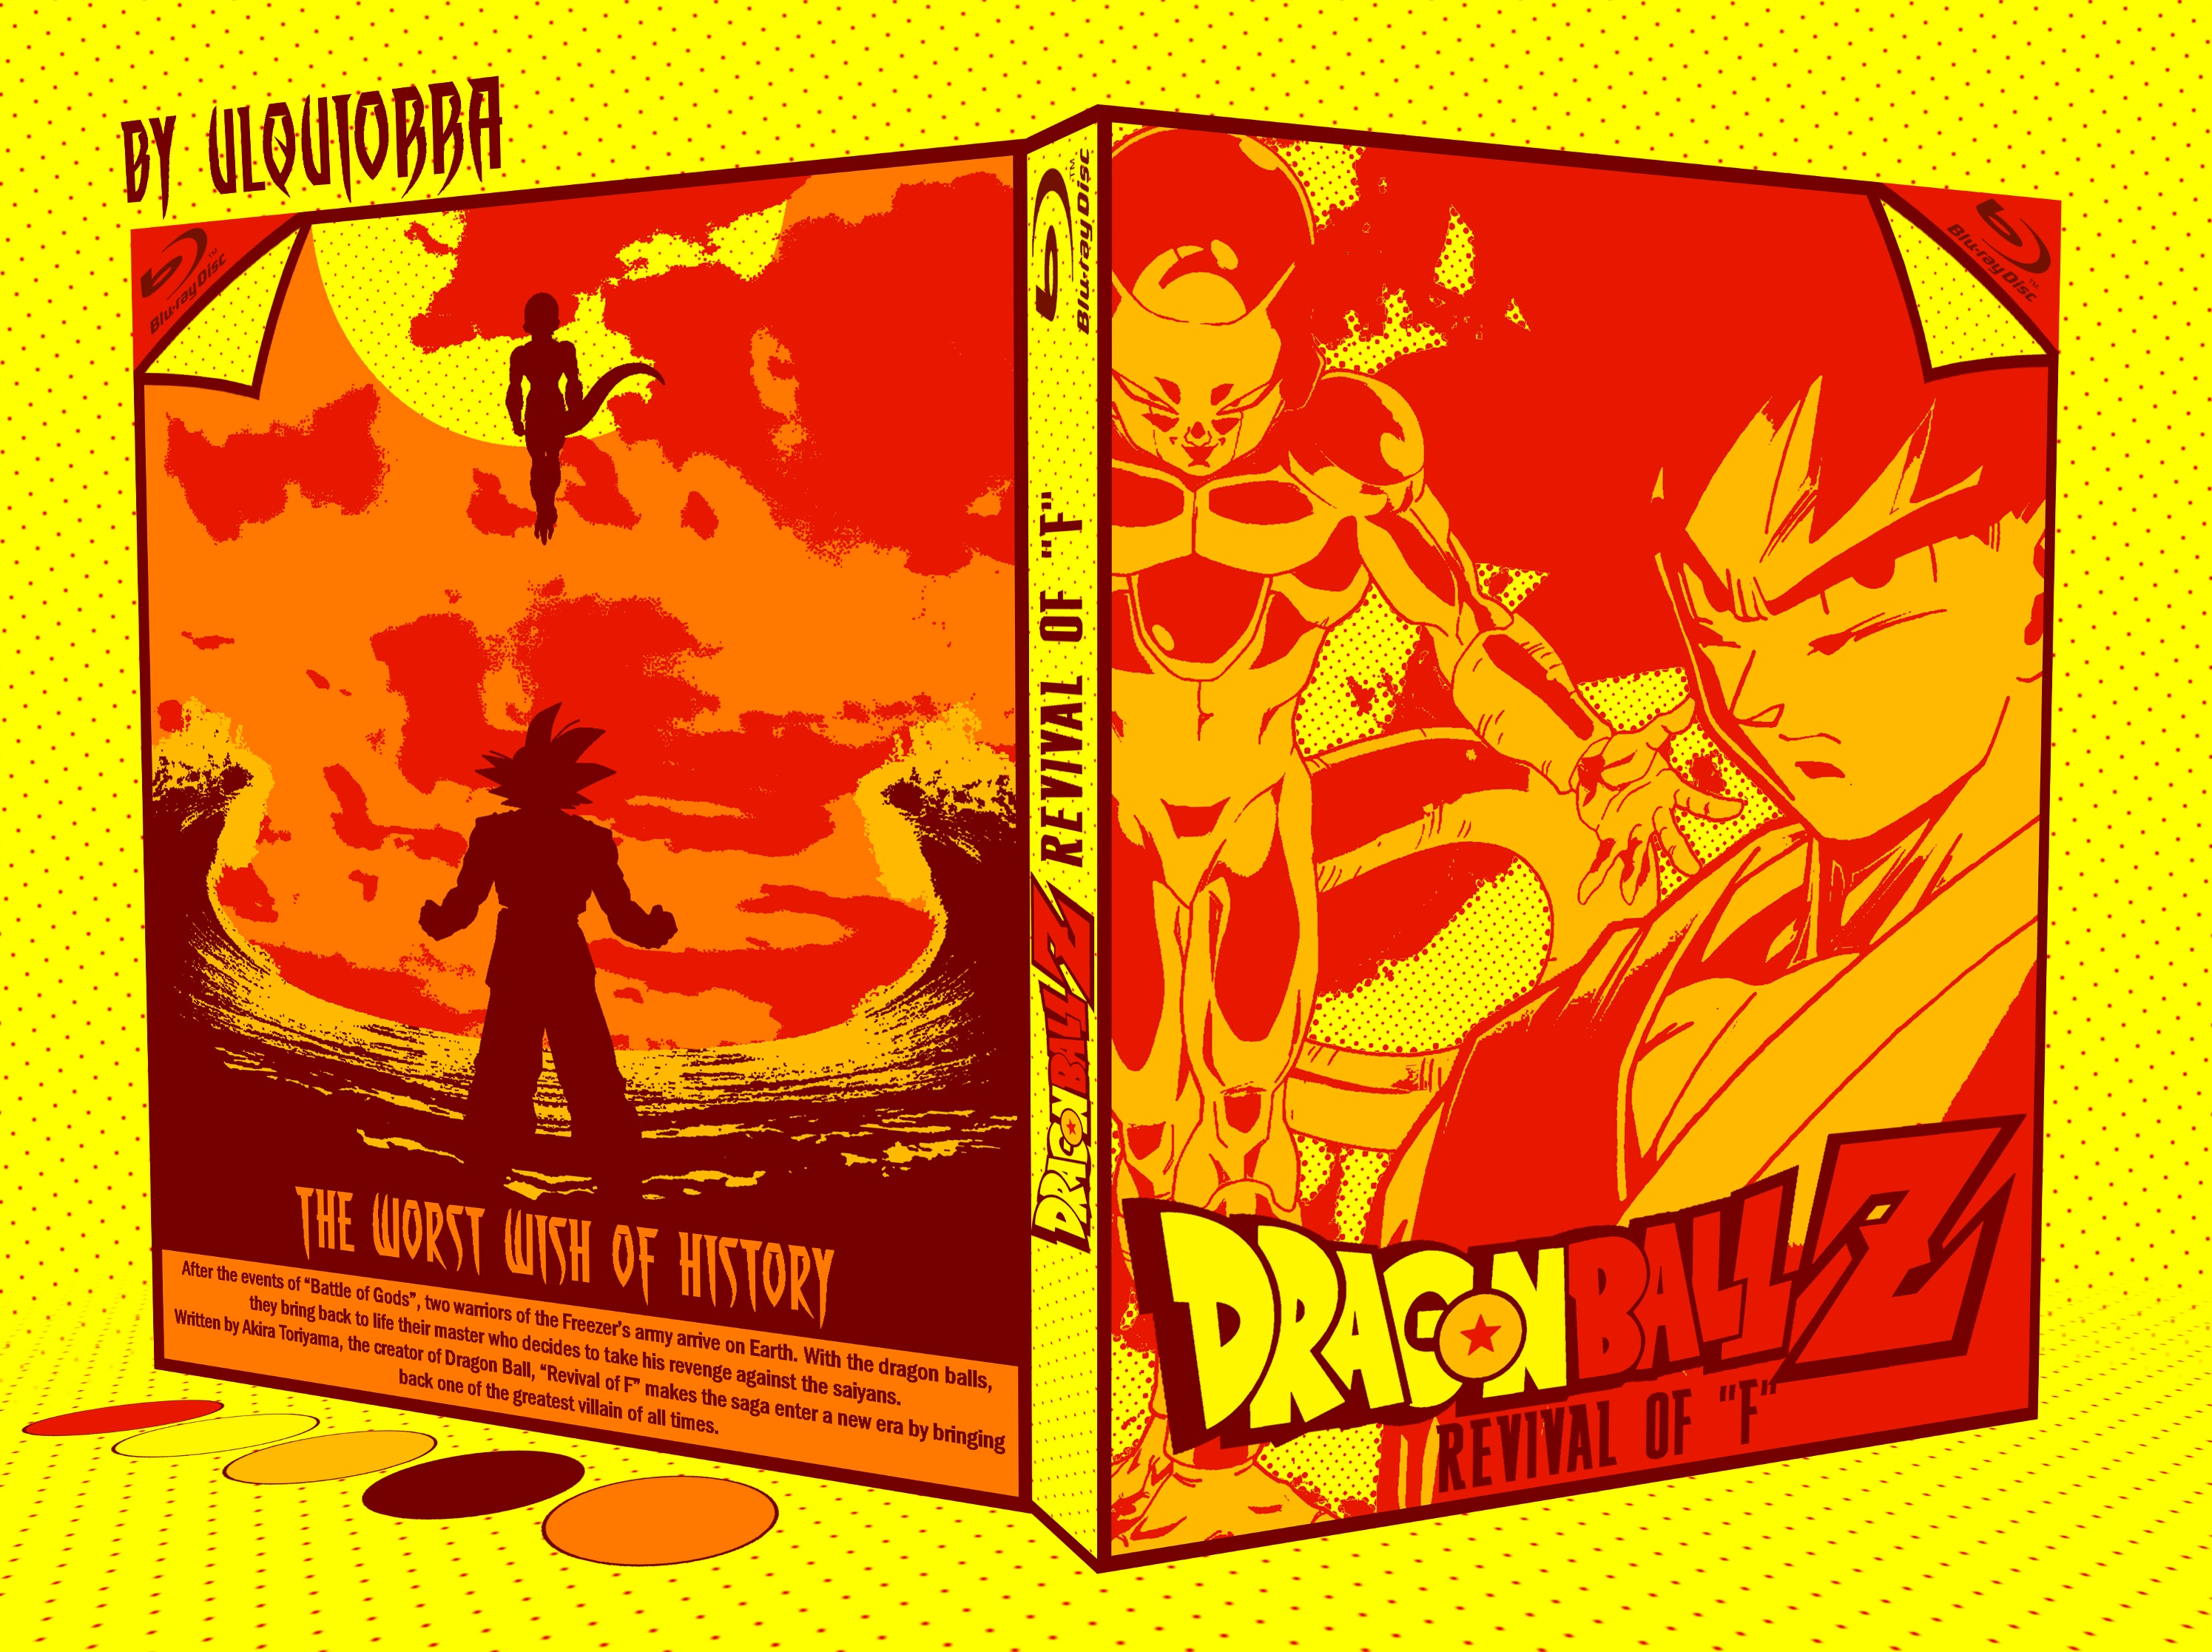 Dragon Ball Z: Revival of "F" box cover